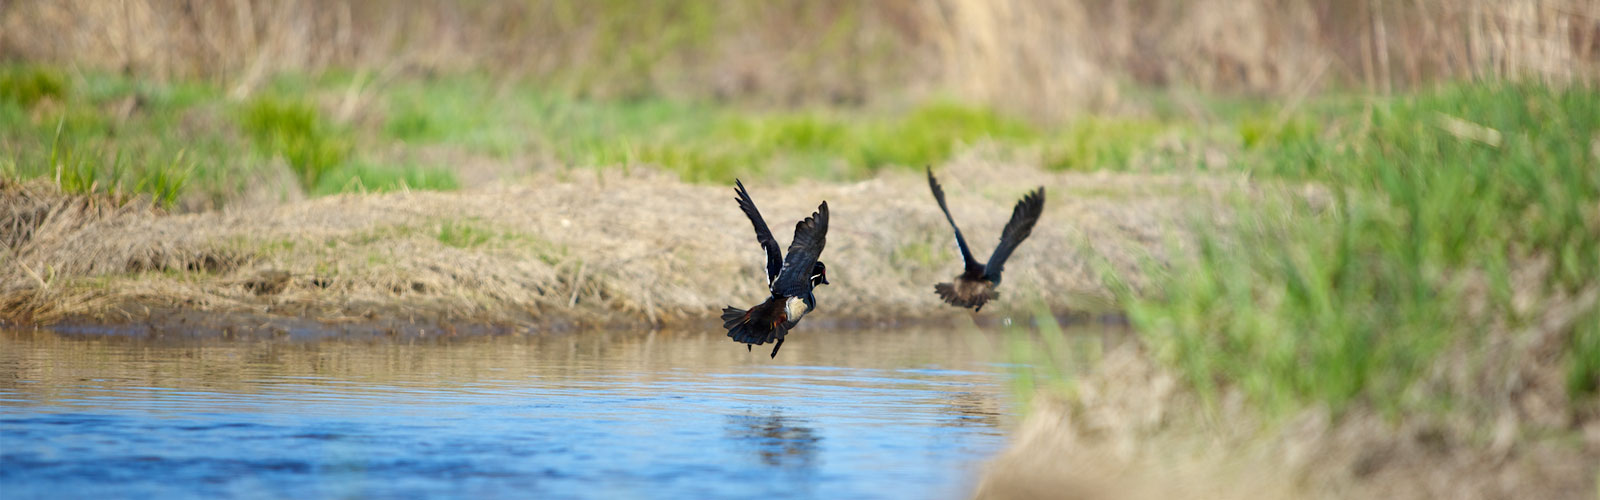 ducks in flight along river bank